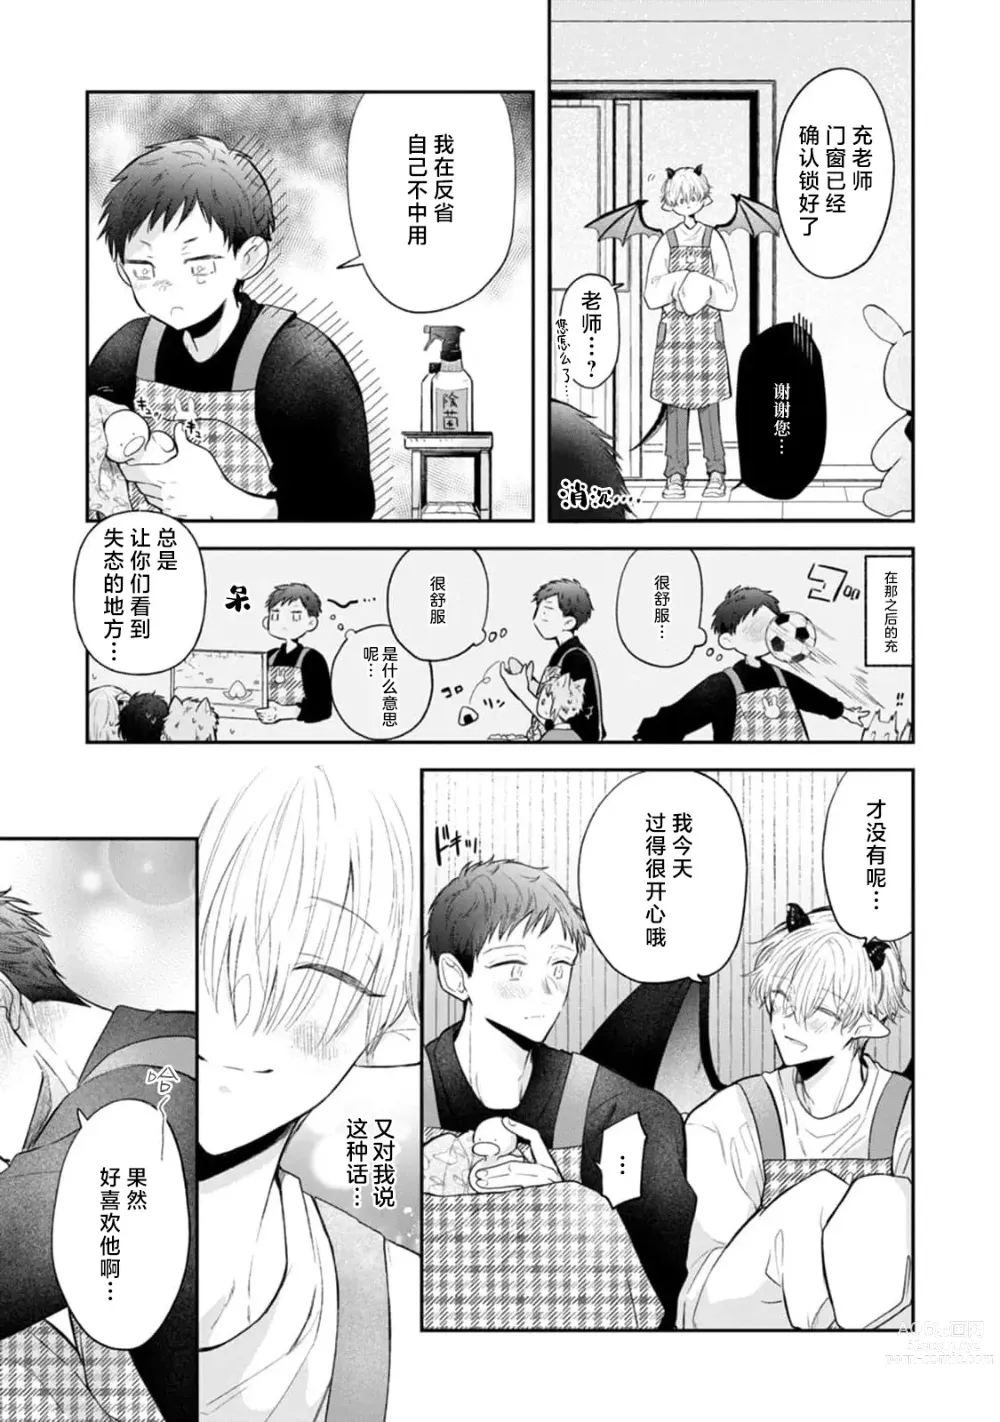 Page 21 of manga 叶羽老师全部是第一次 1-6 end